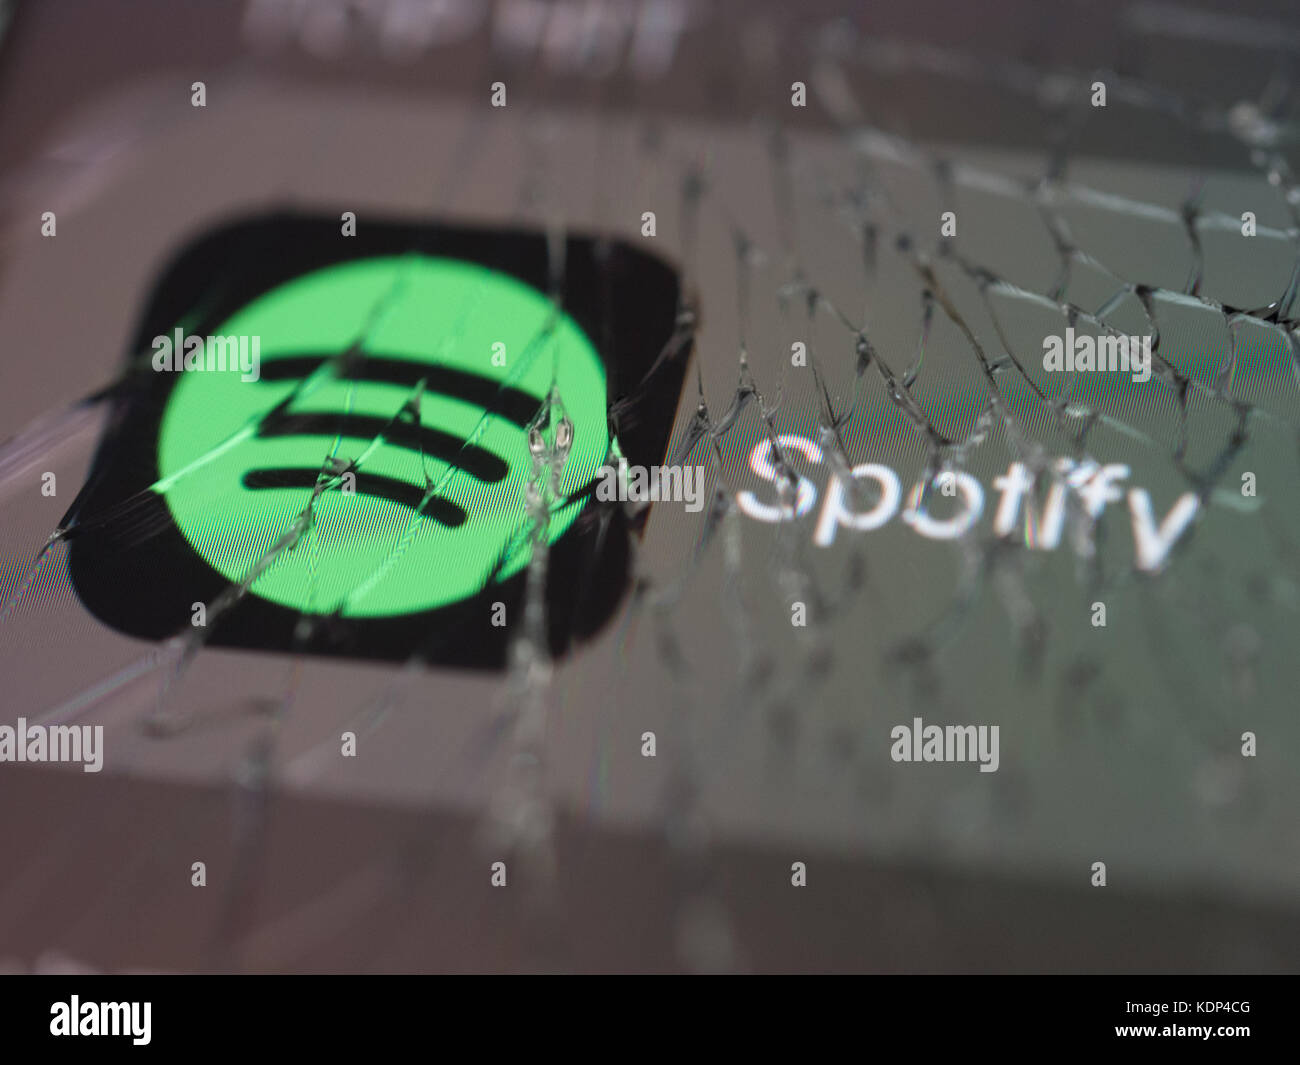 Spotify logo displayed on a broken smartphone screen Stock Photo